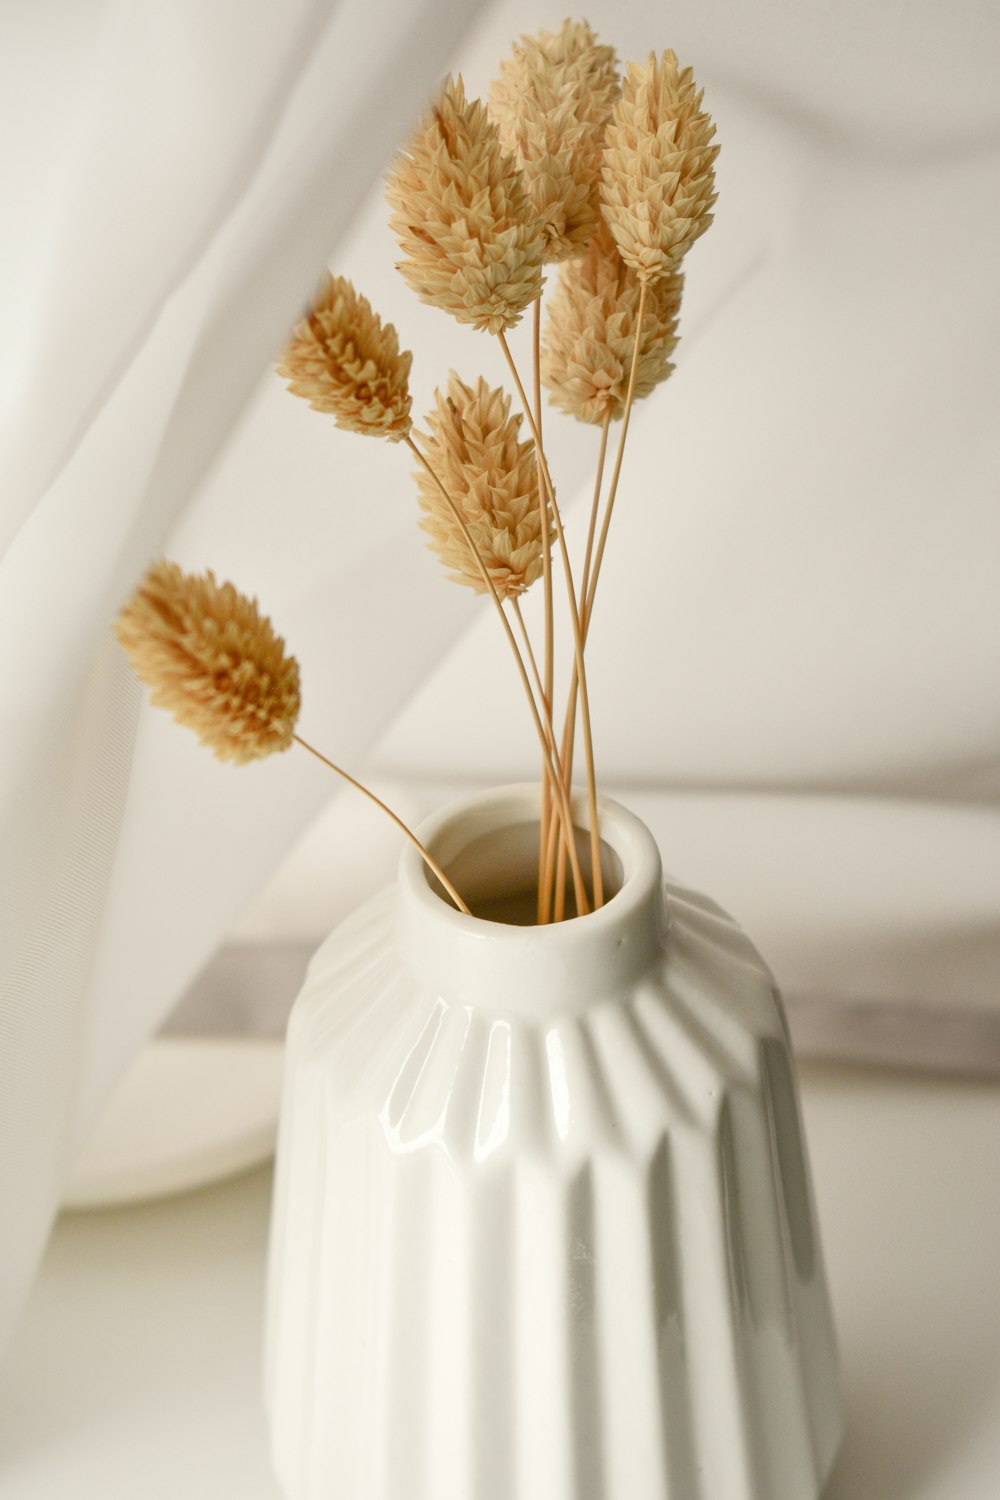 brown and white flower in white ceramic vase